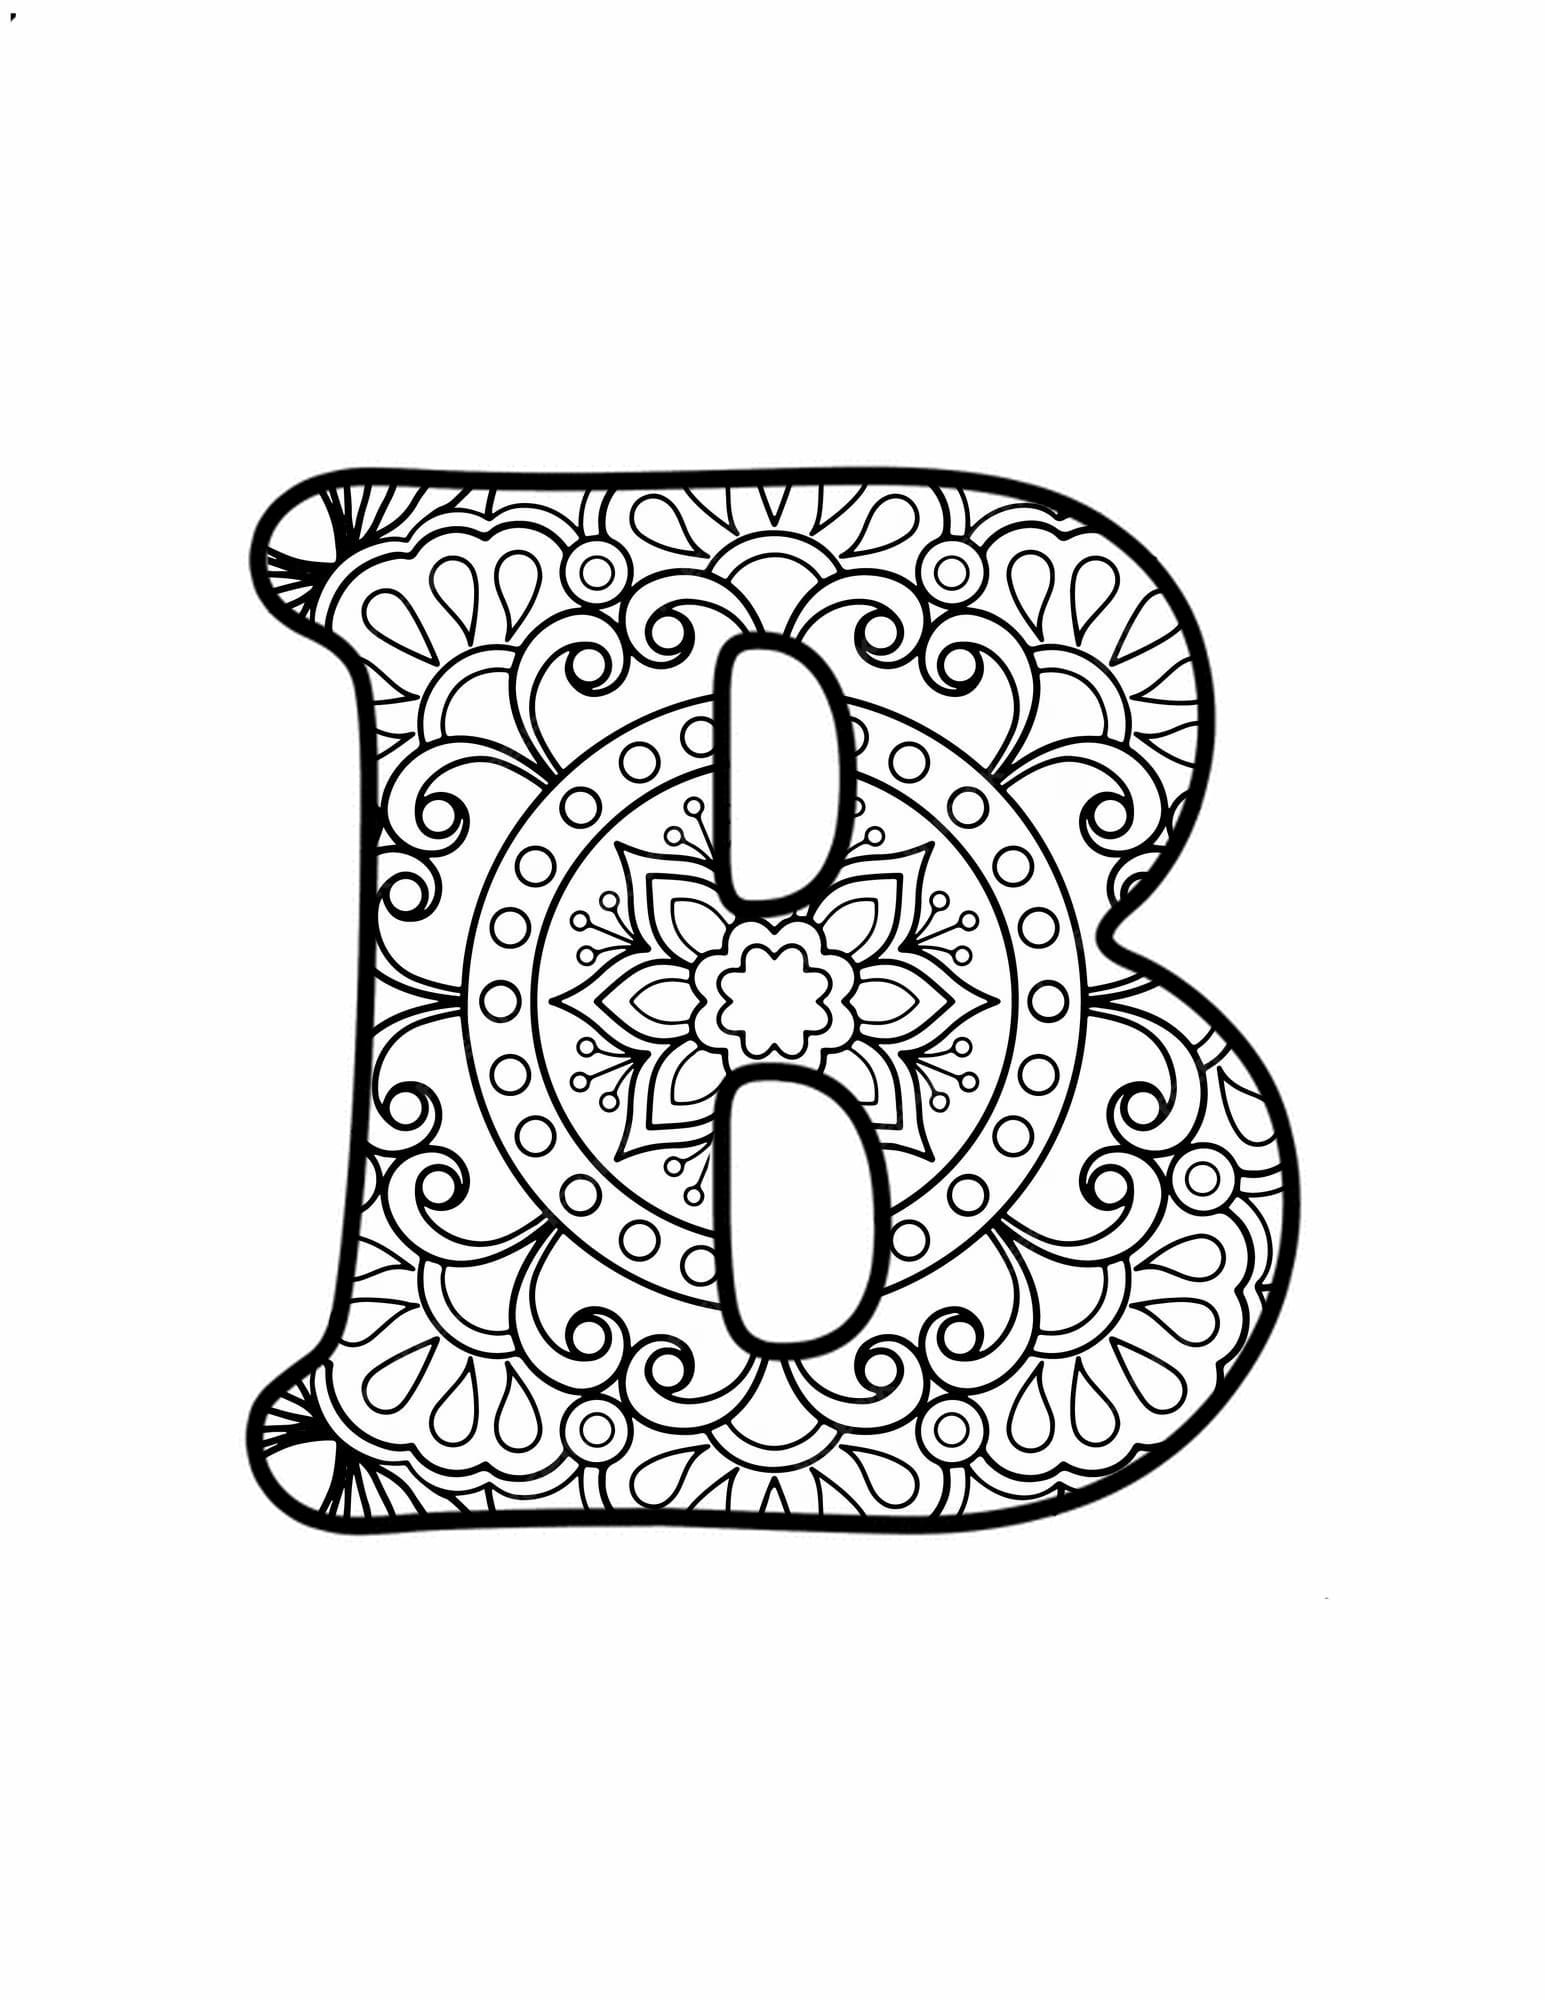 Letter B Mandala Alphabet coloring page - Download, Print or Color ...